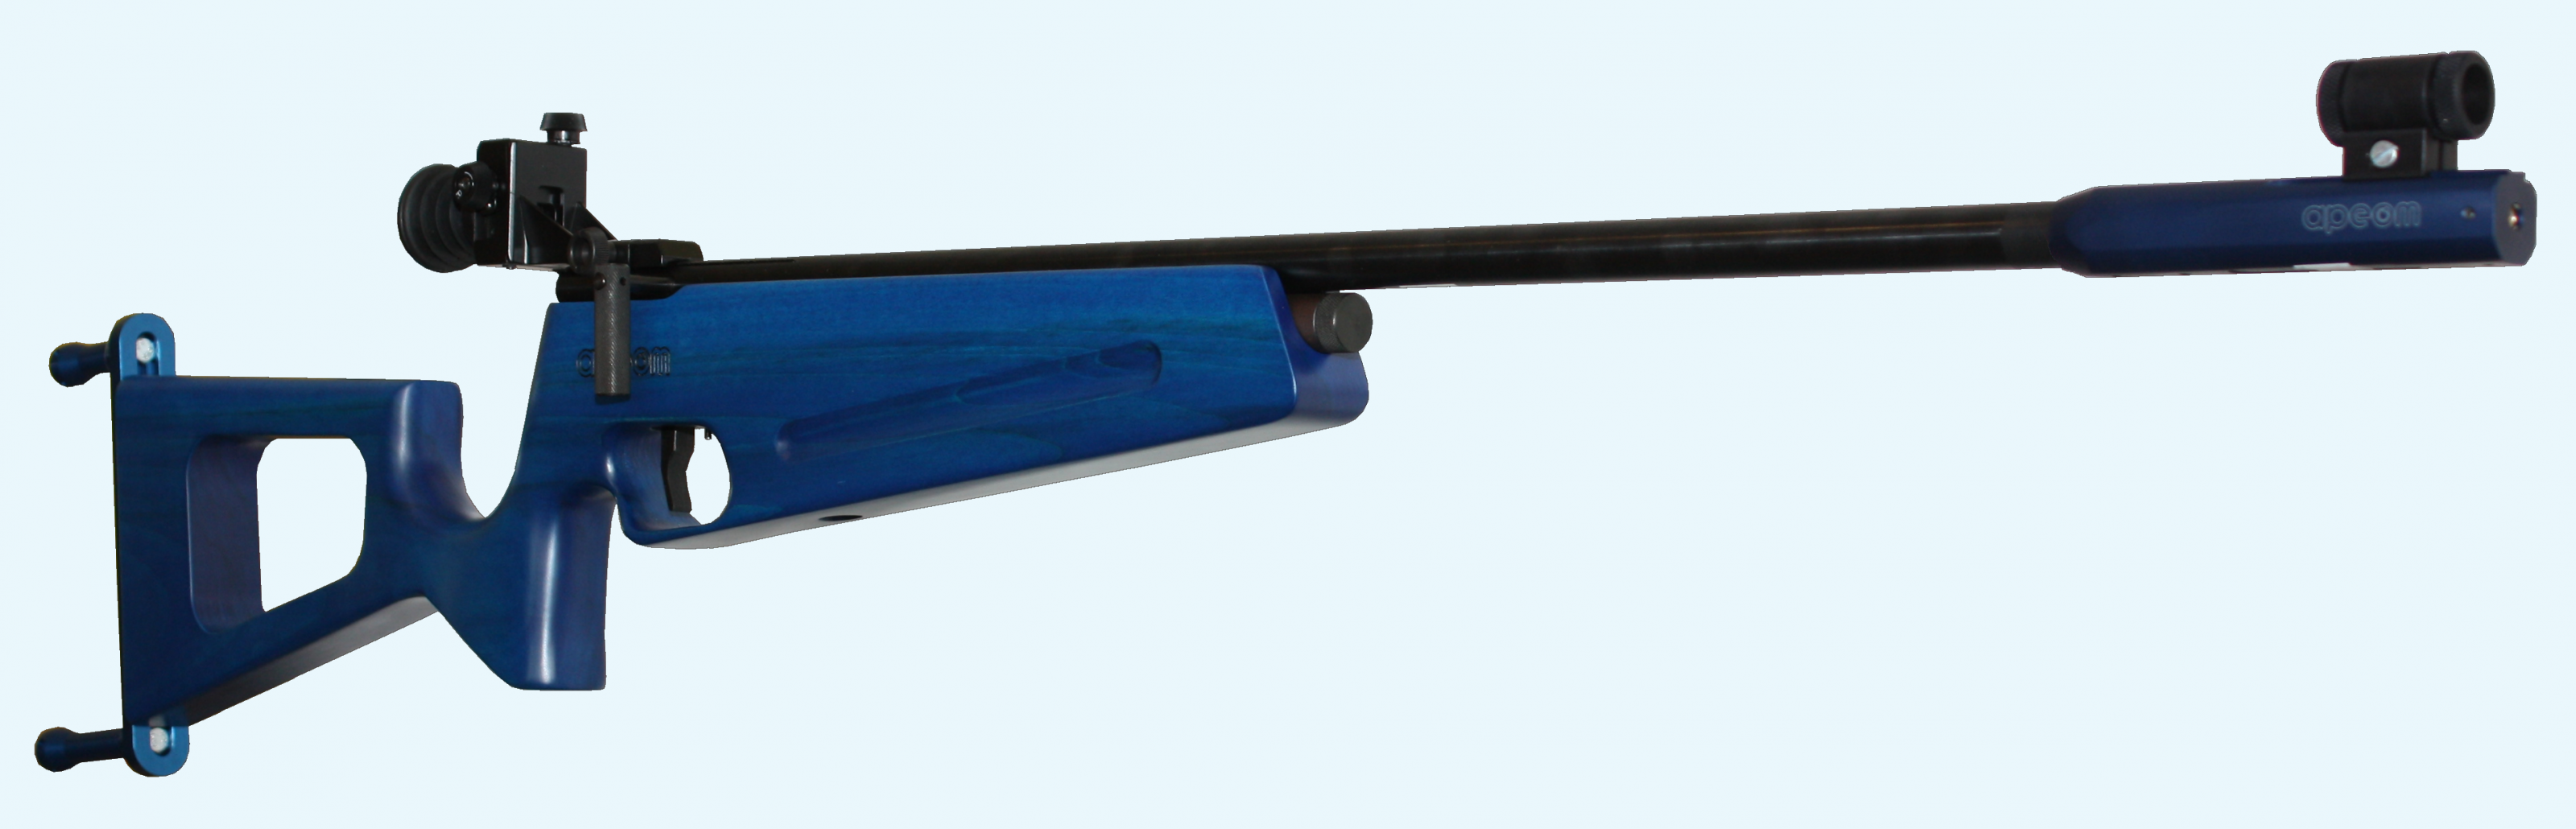 Laser Rifle E-Gun 103